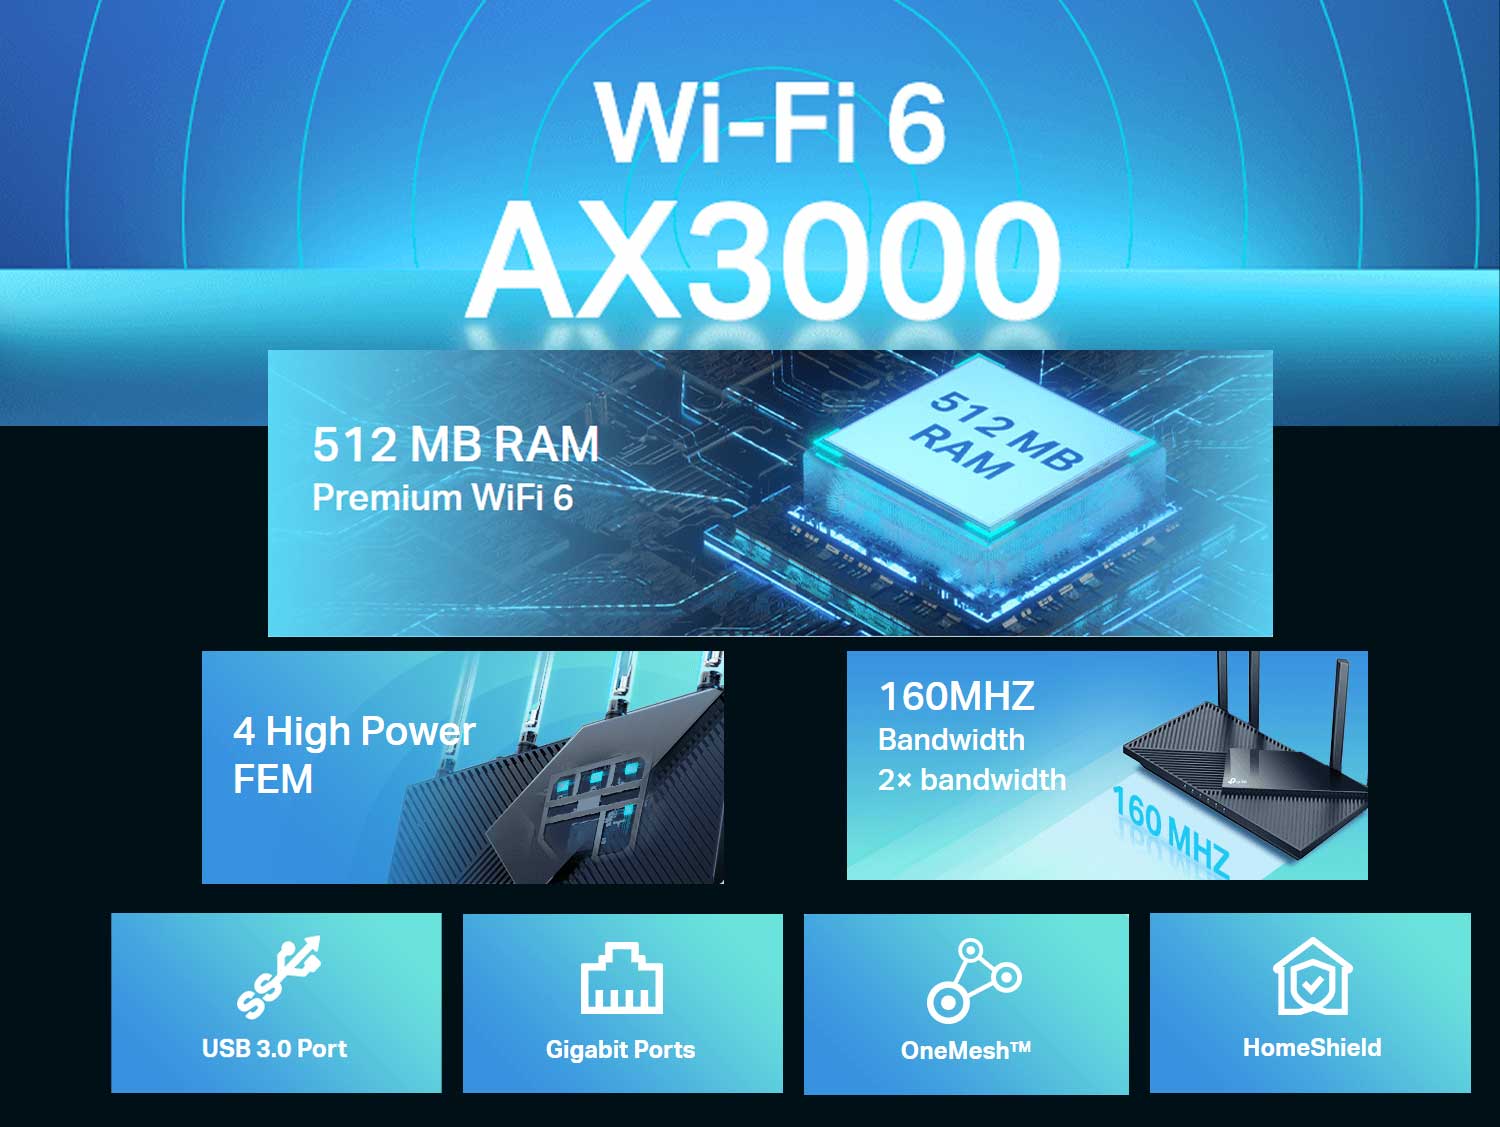 Tp-Link Archer AX55 AX3000 Dual Band Gigabit Wi-Fi 6 Router